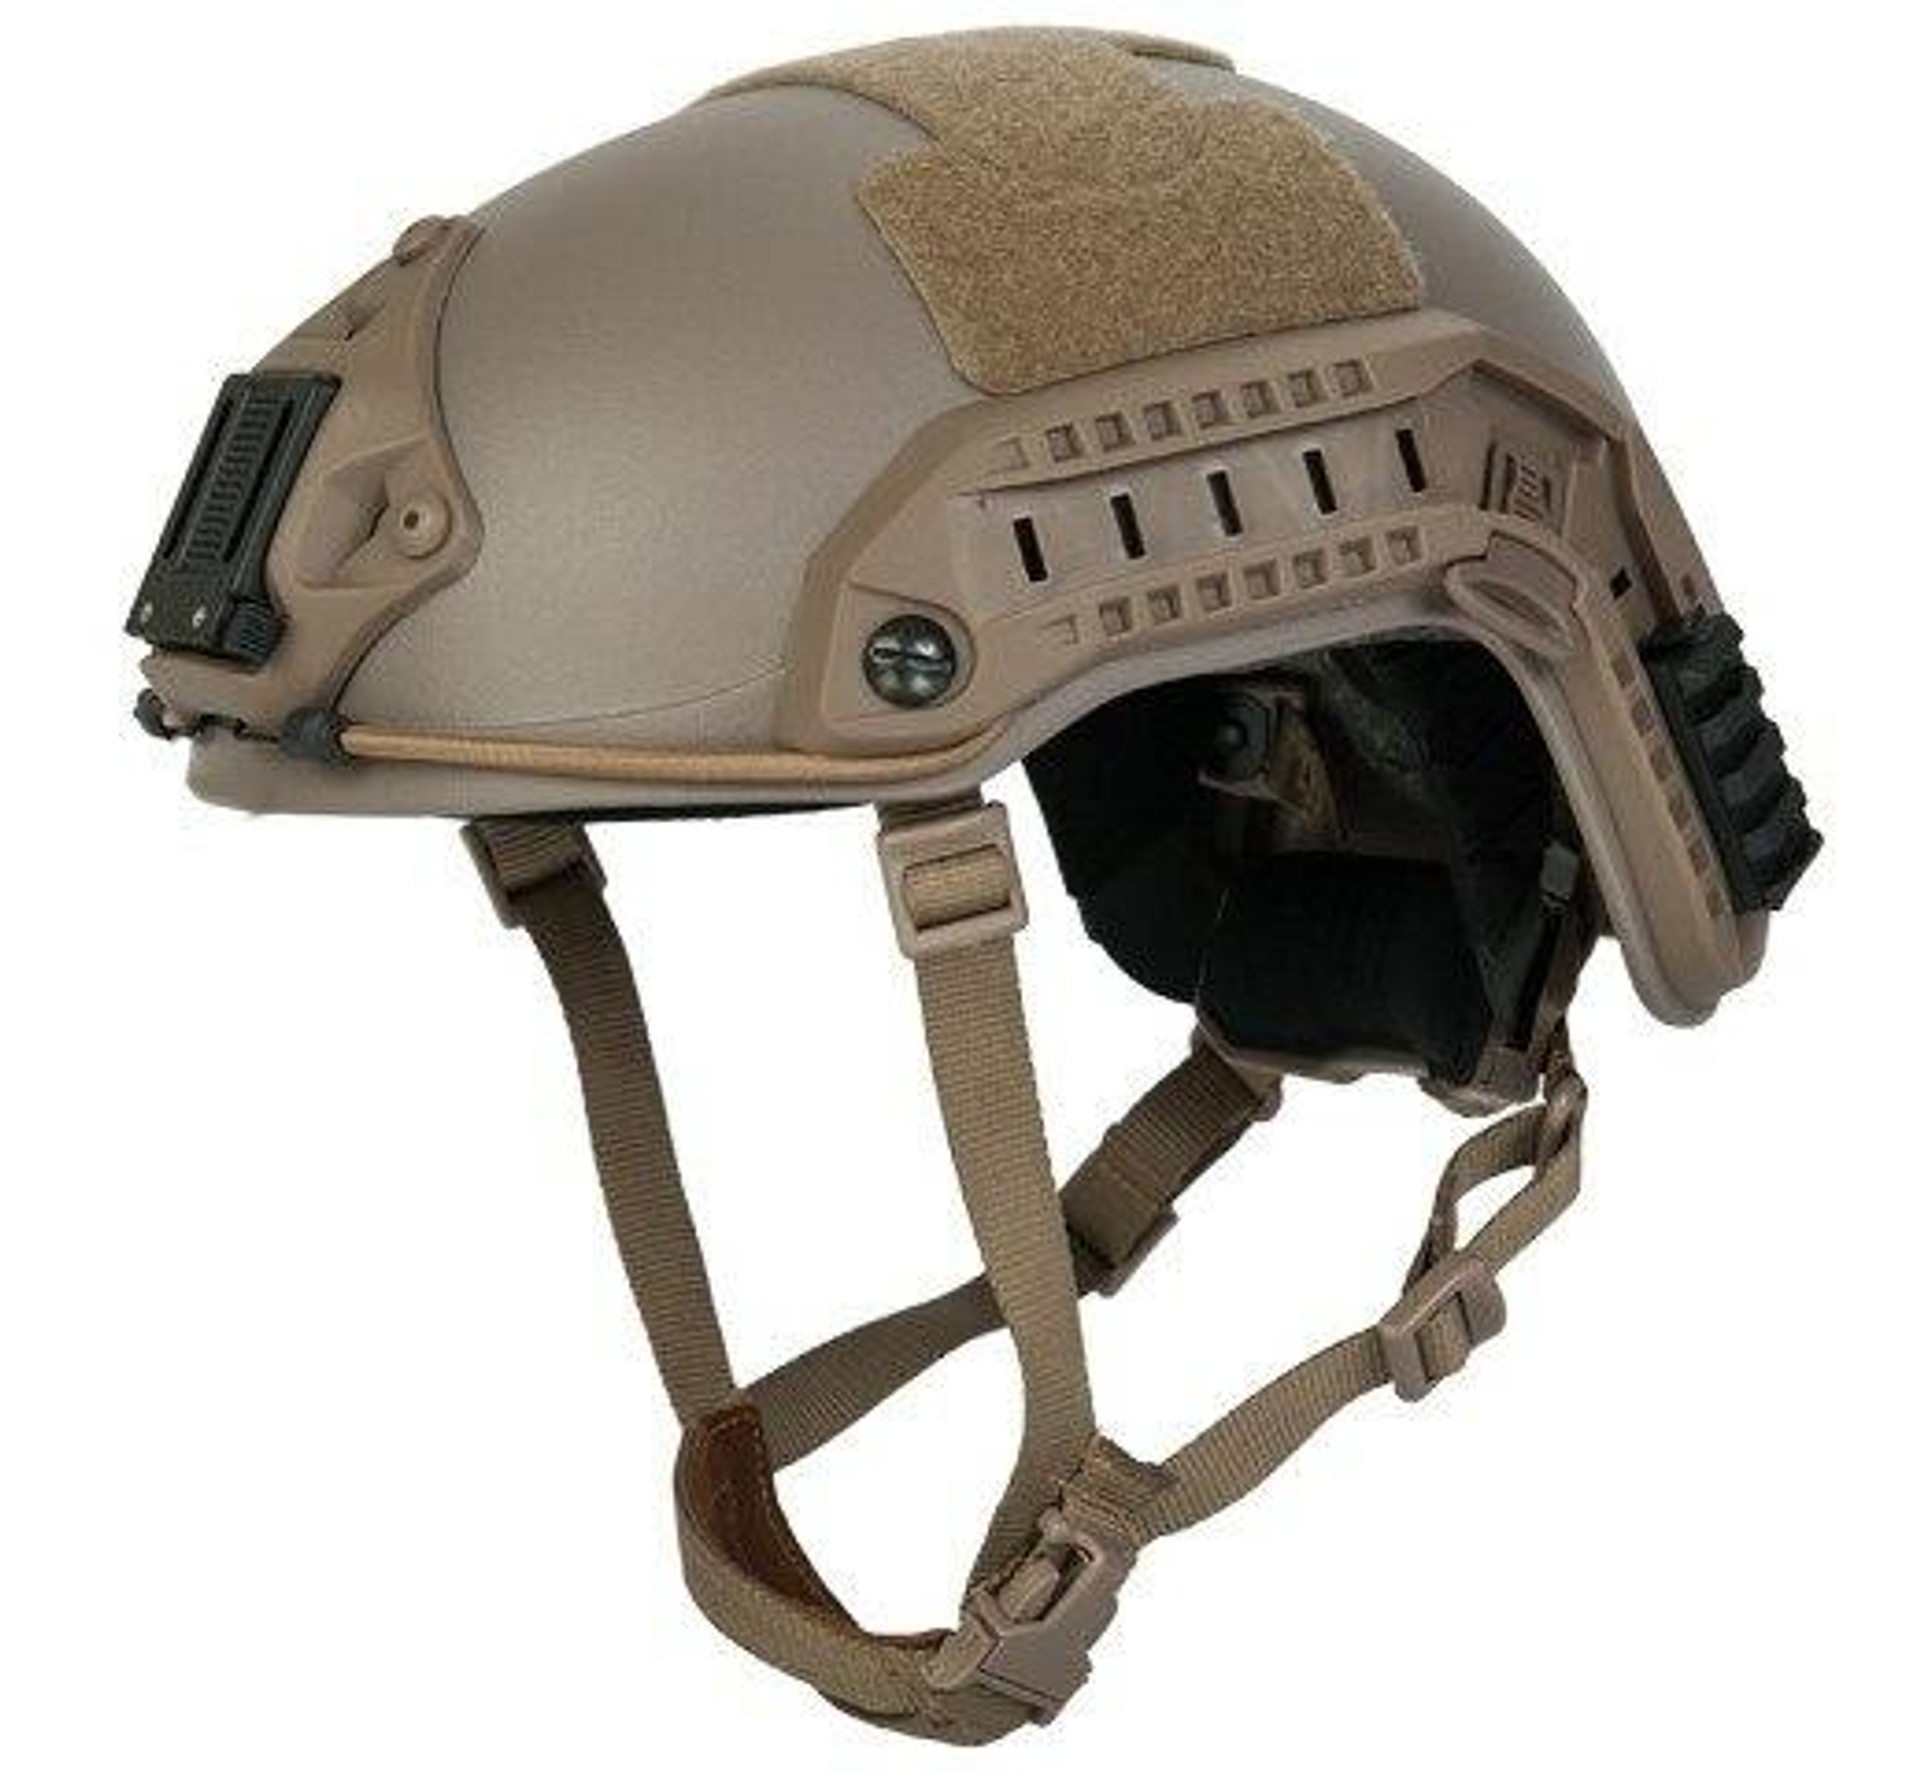 Lancer Tactical Maritime SpecOps Military Style Helmet w/ NVG Mount - Tan